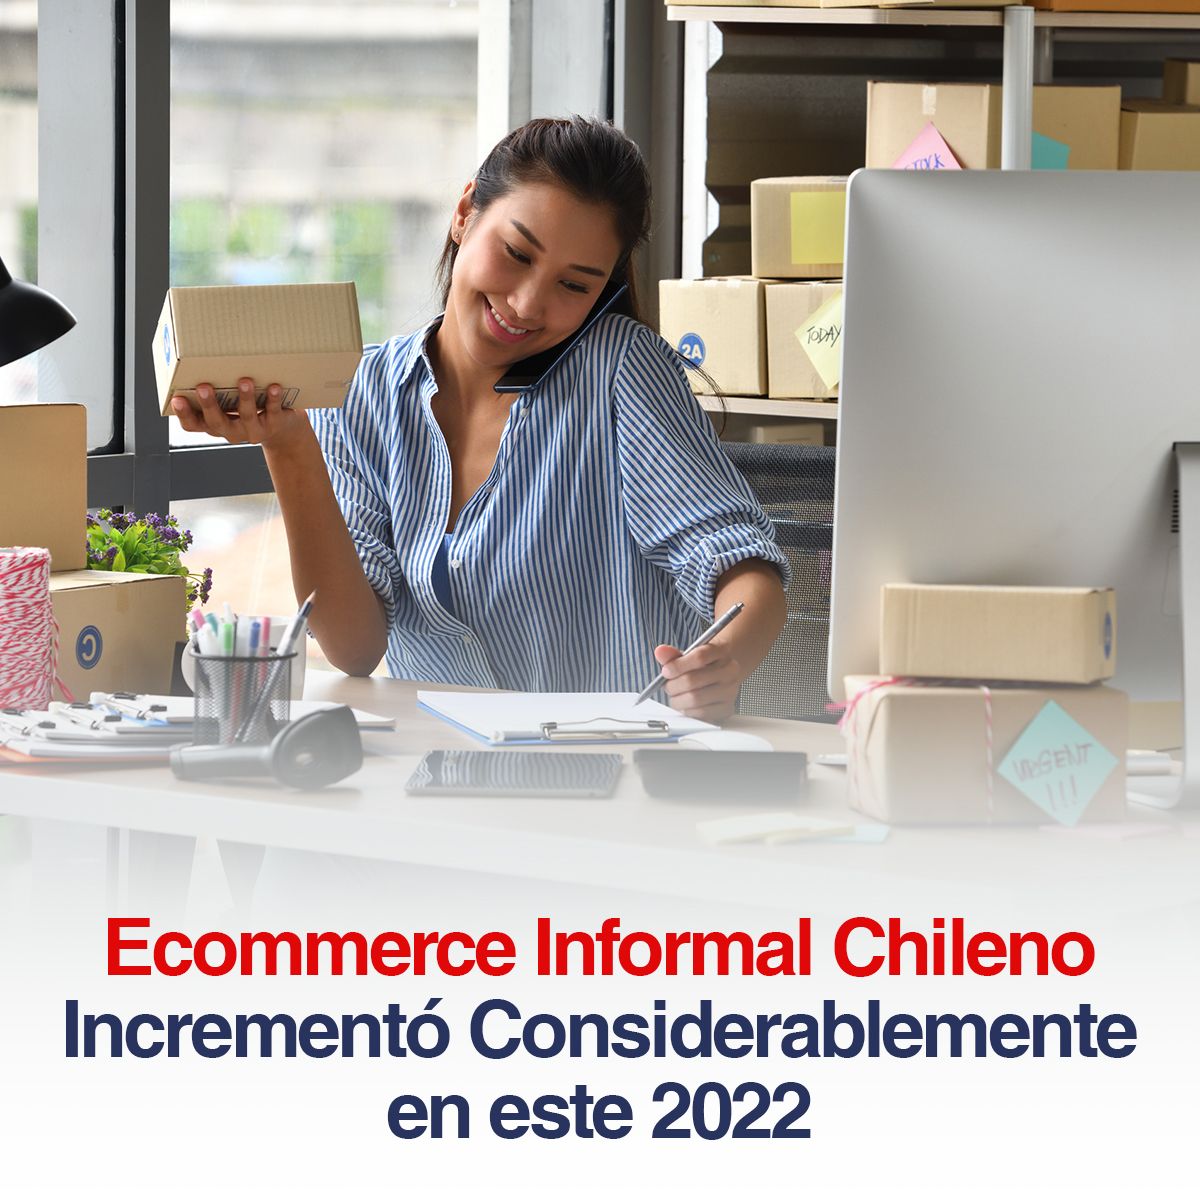 Ecommerce Informal Chileno Incrementó Considerablemente en este 2022